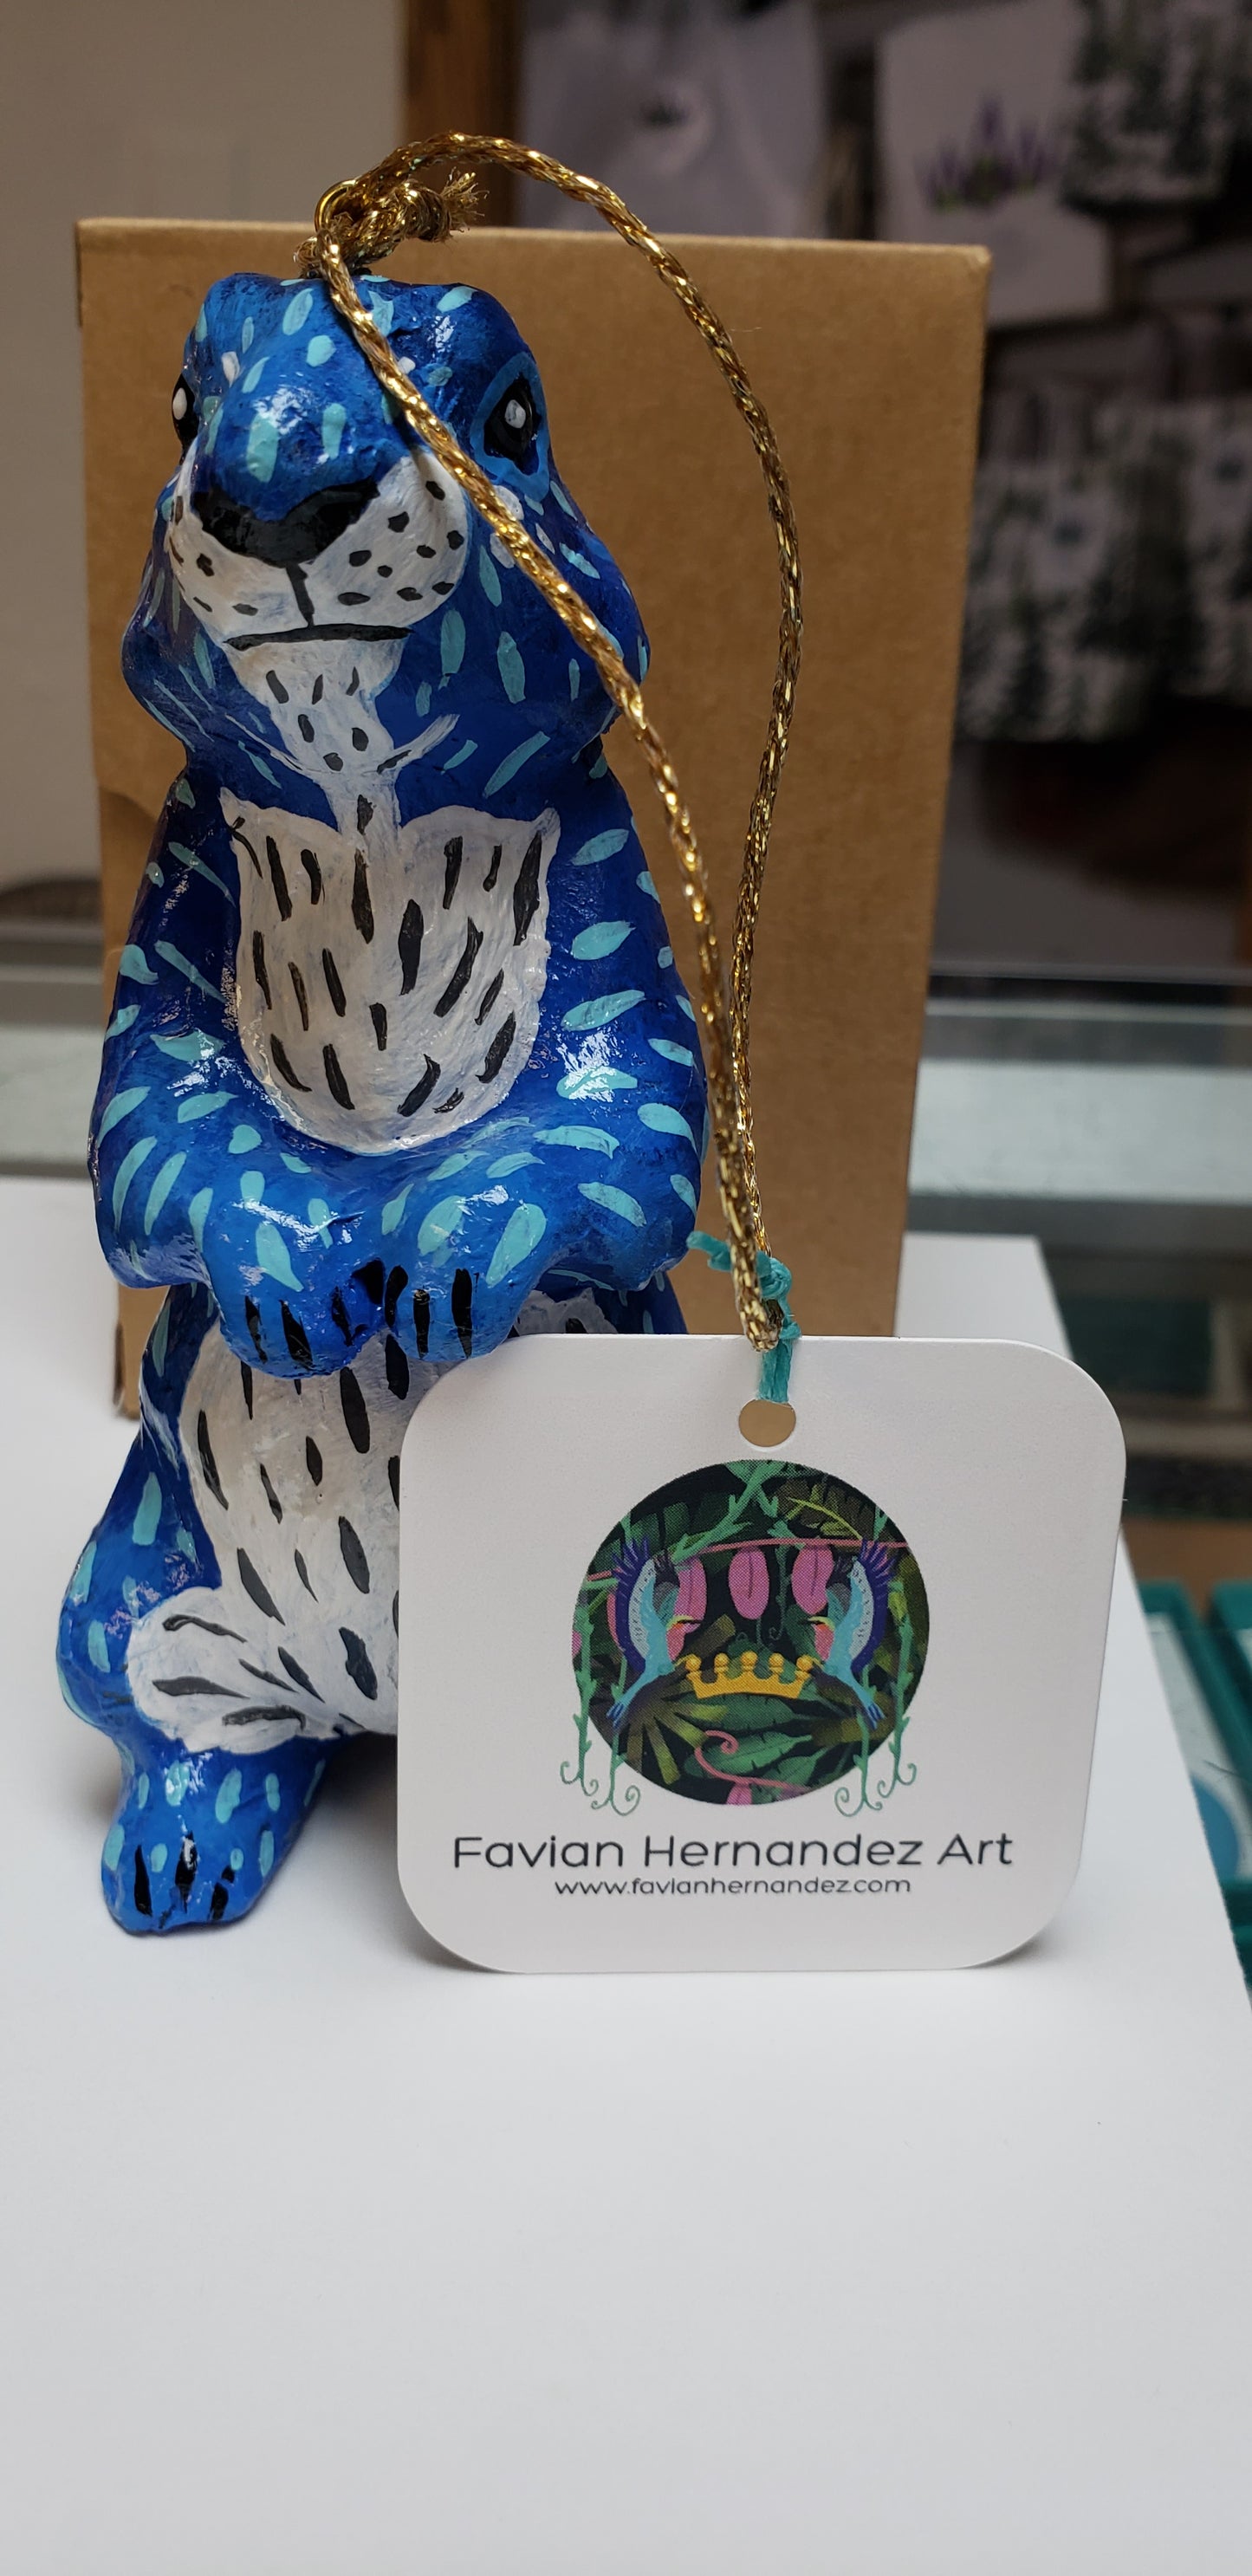 Prairie Dog Collectible Ornament Art Ornament by Favian Hernandez